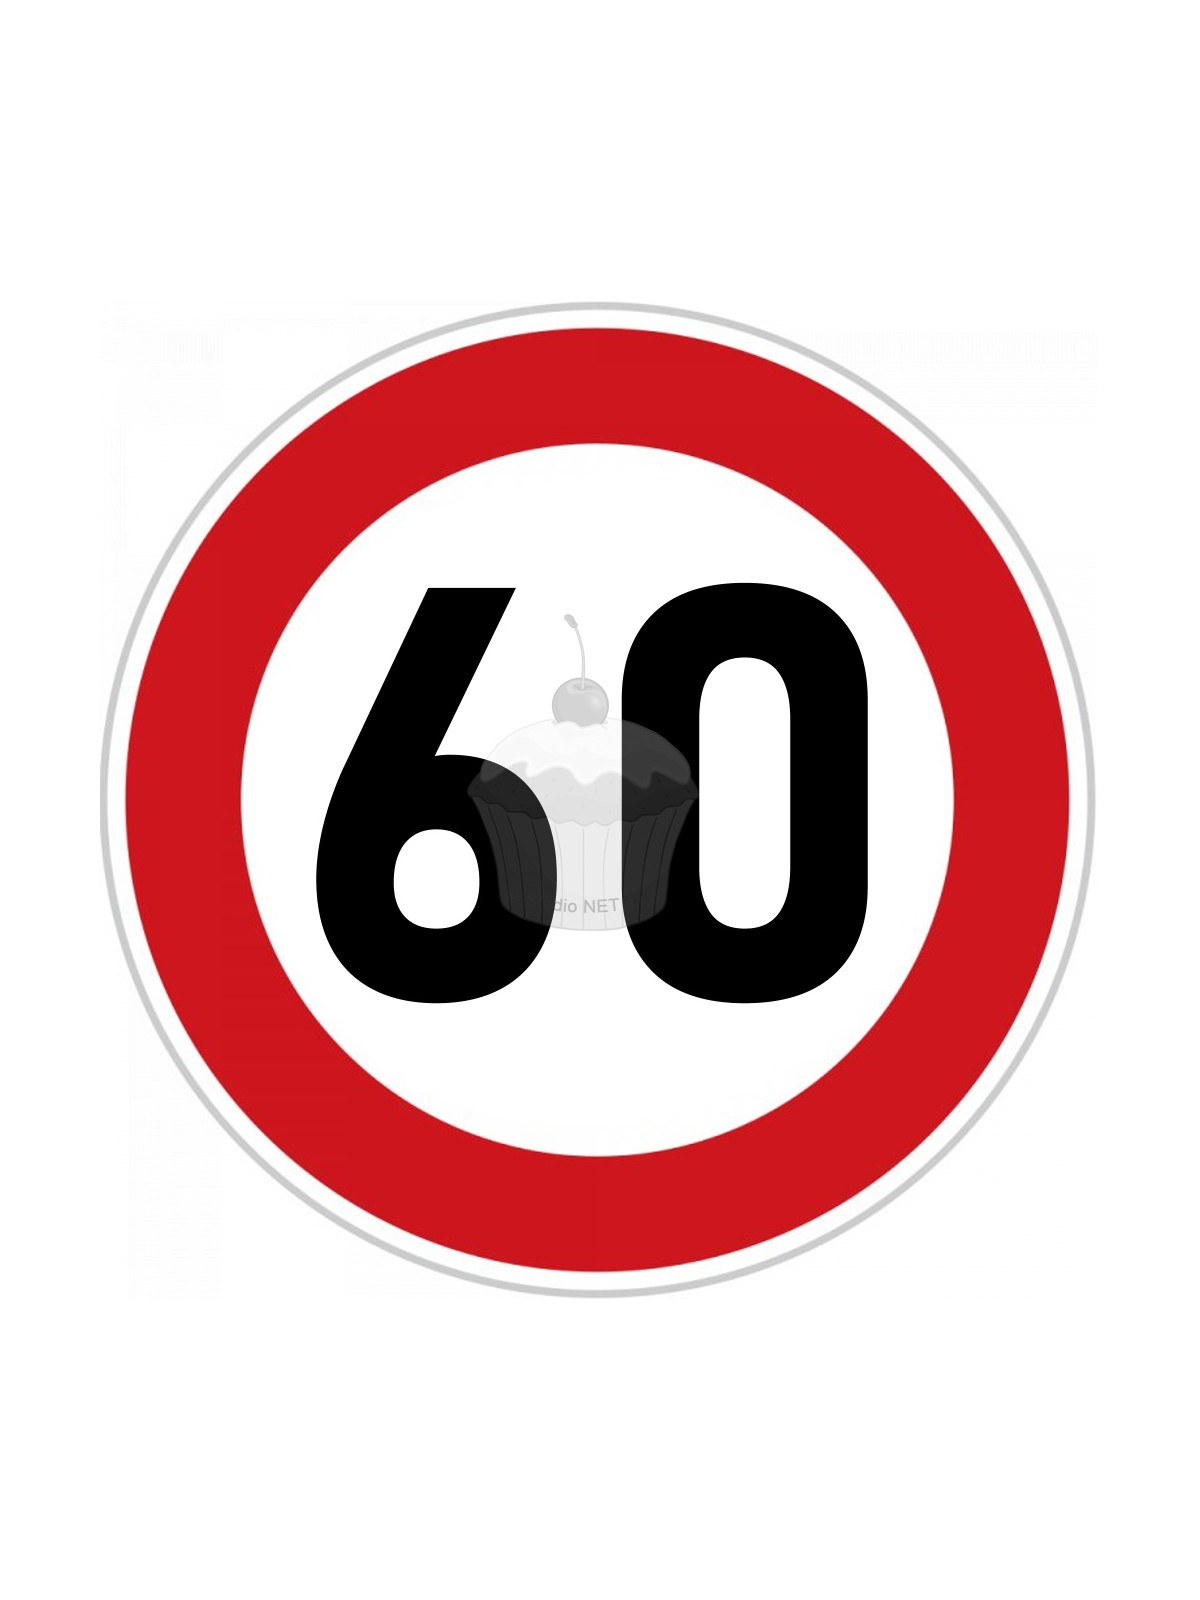 Edible paper "60th Birthday" ban sign A4